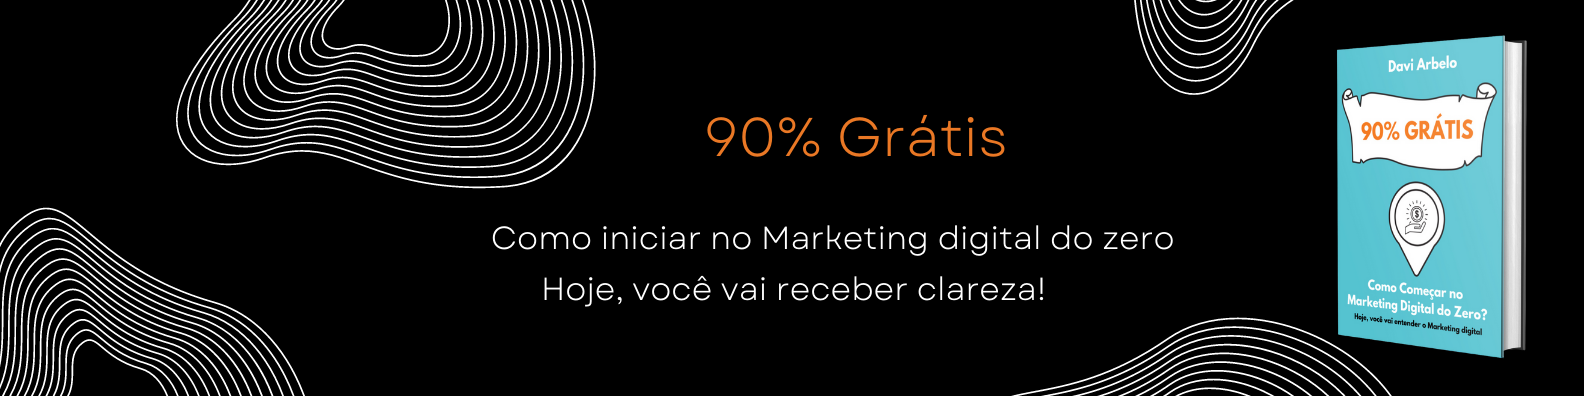 Portfólio - Davi Arbelo- Ebook Marketing digital